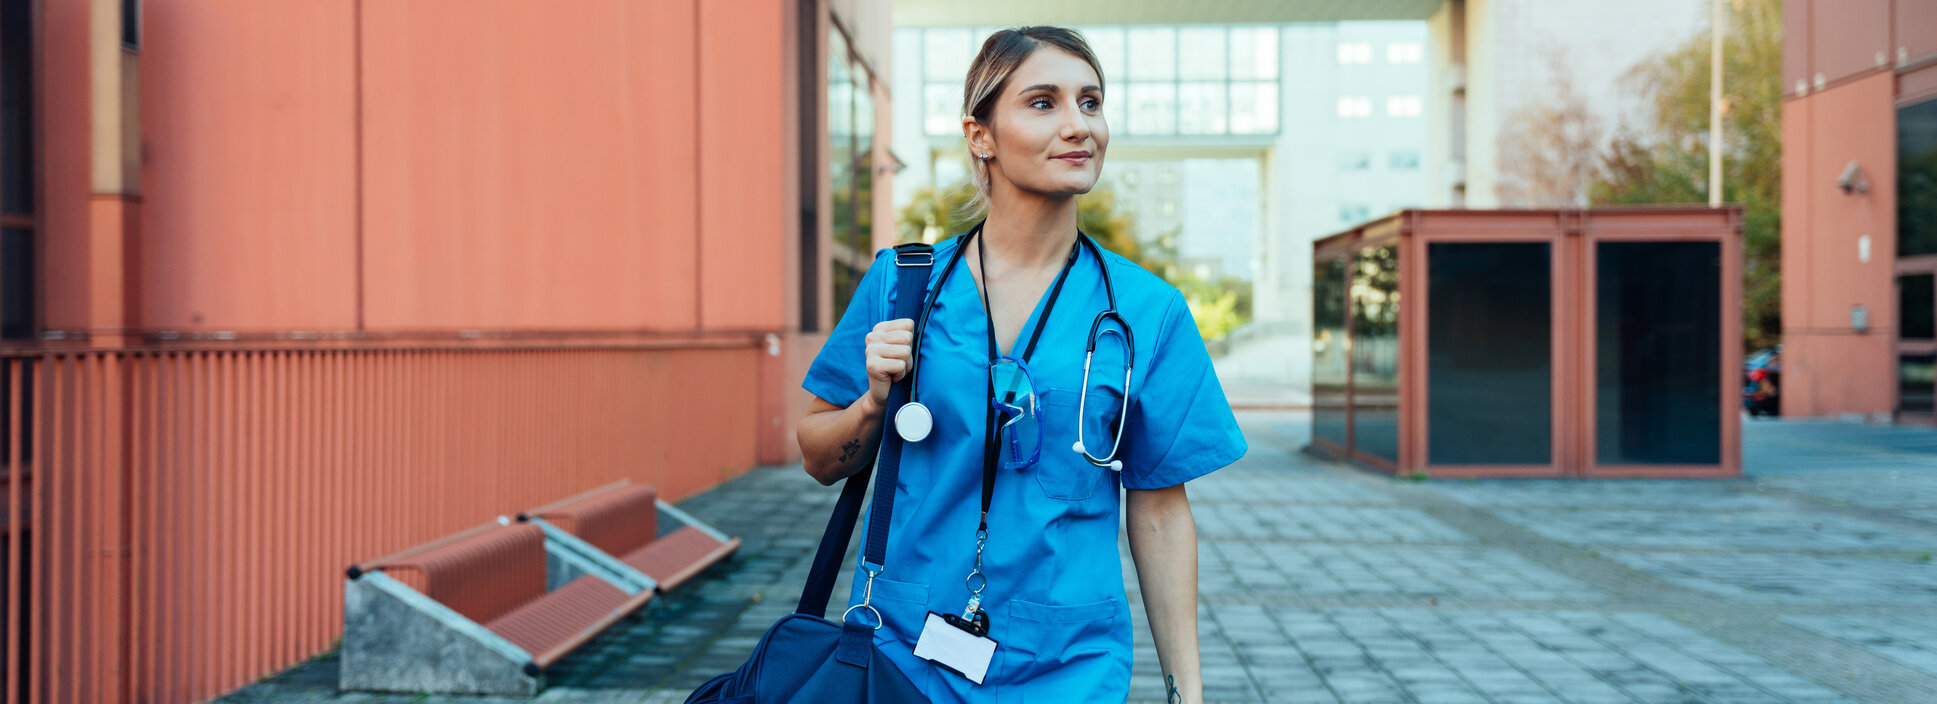 medfuture-newzeland-age-care-nurse-jobs